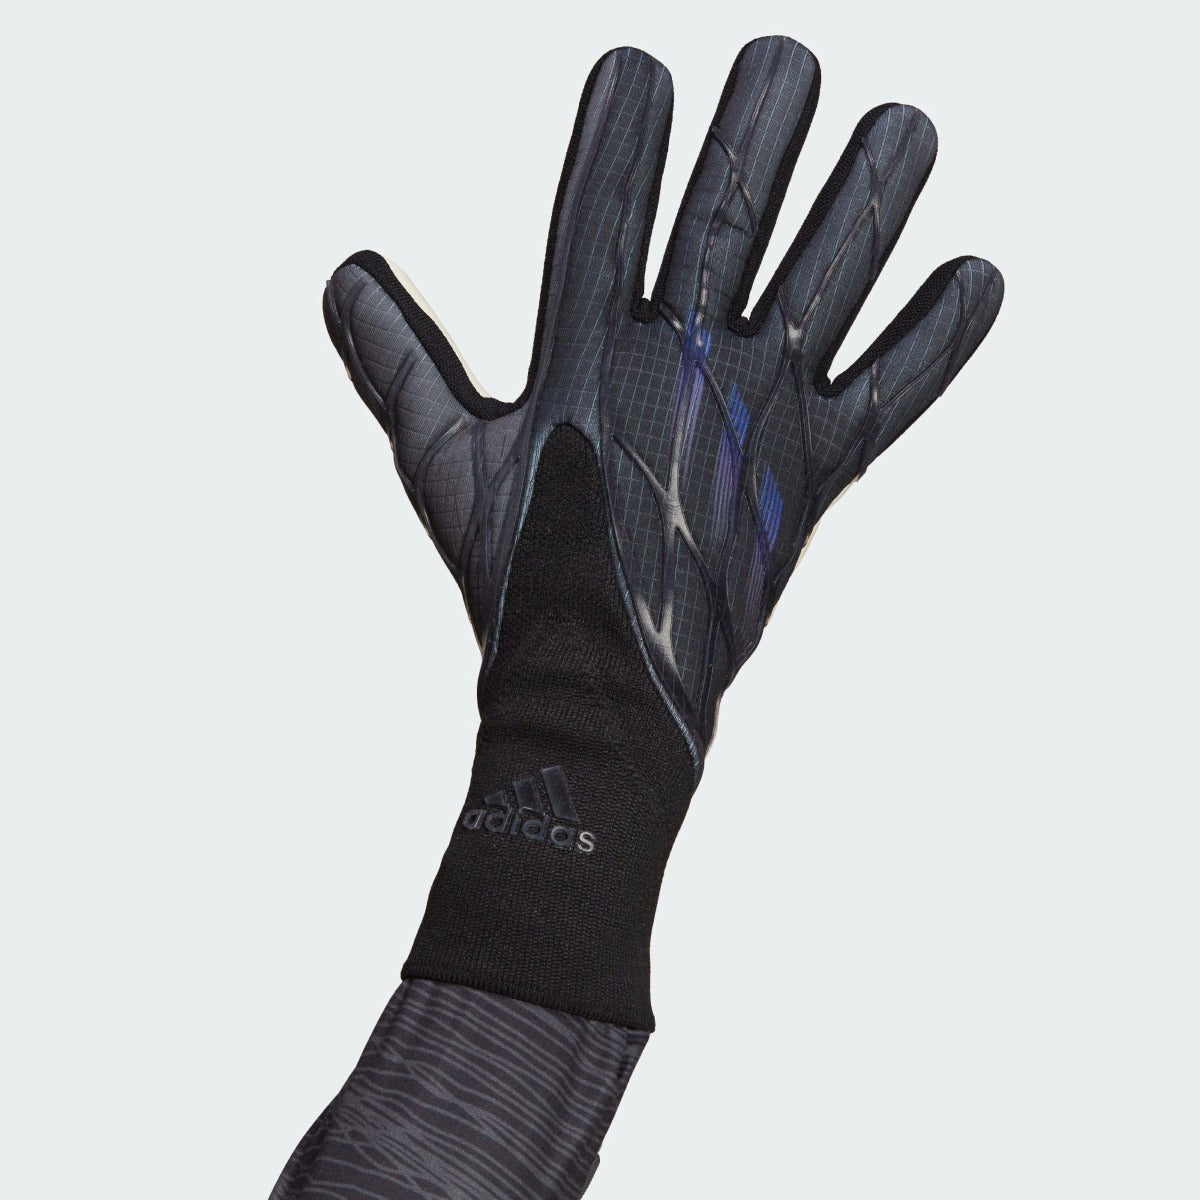 Adidas X Pro Goalkeeper Gloves - Black-Grey-Blue (Single - Outer)